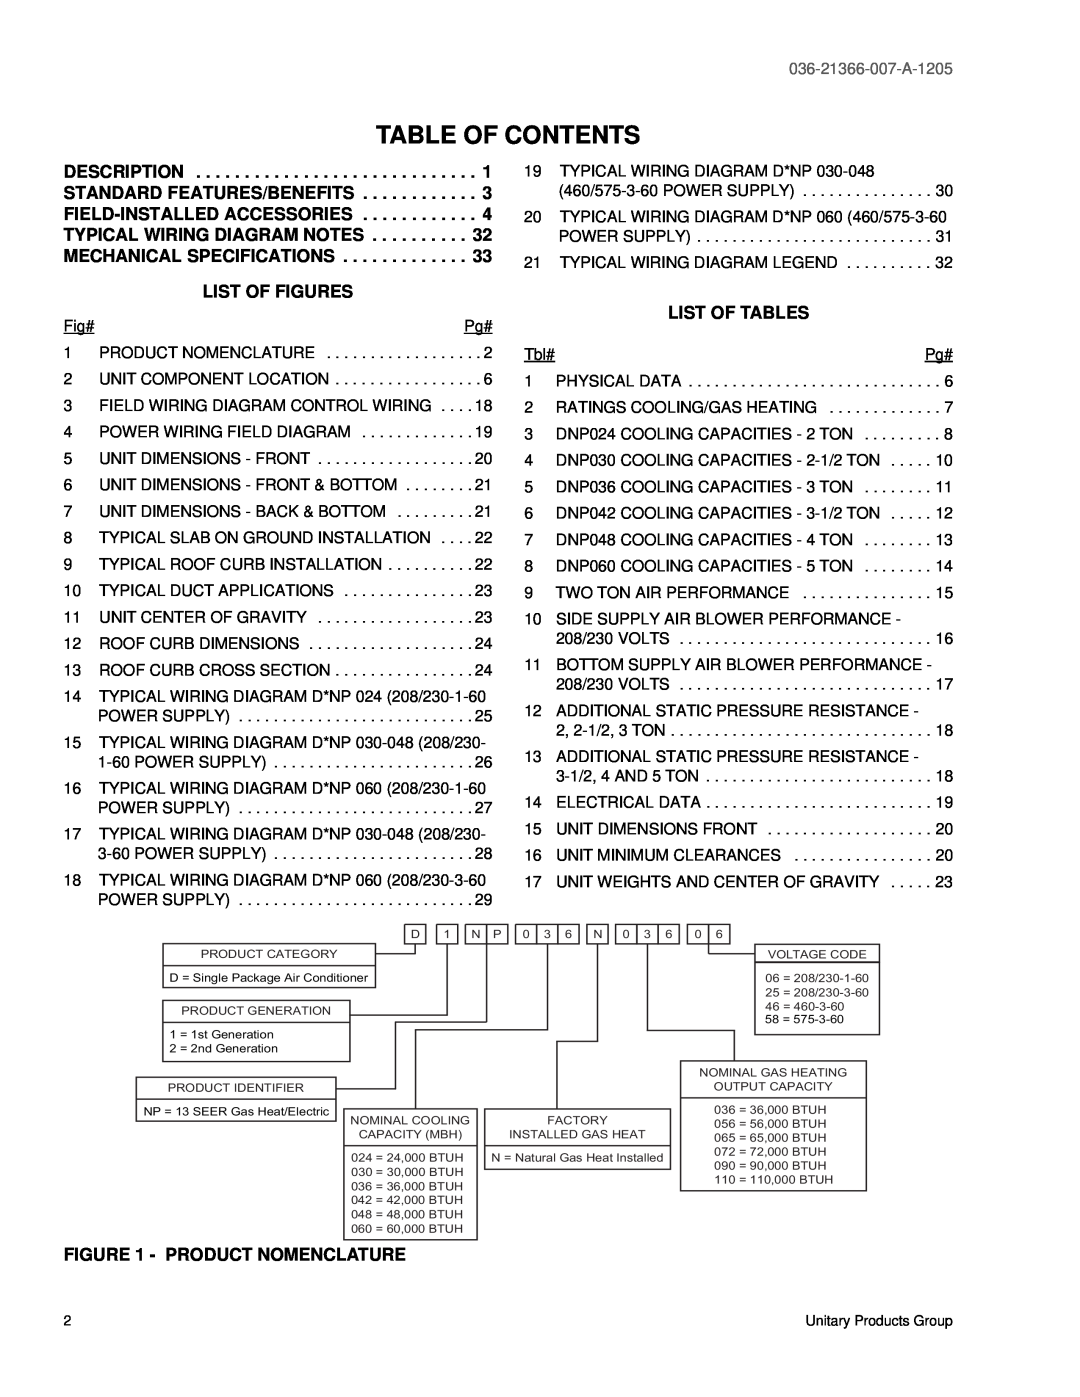 York DNP030, DNP060, DNP048 Table Of Contents, List Of Figures, List Of Tables, Product Nomenclature, 036-21366-007-A-1205 